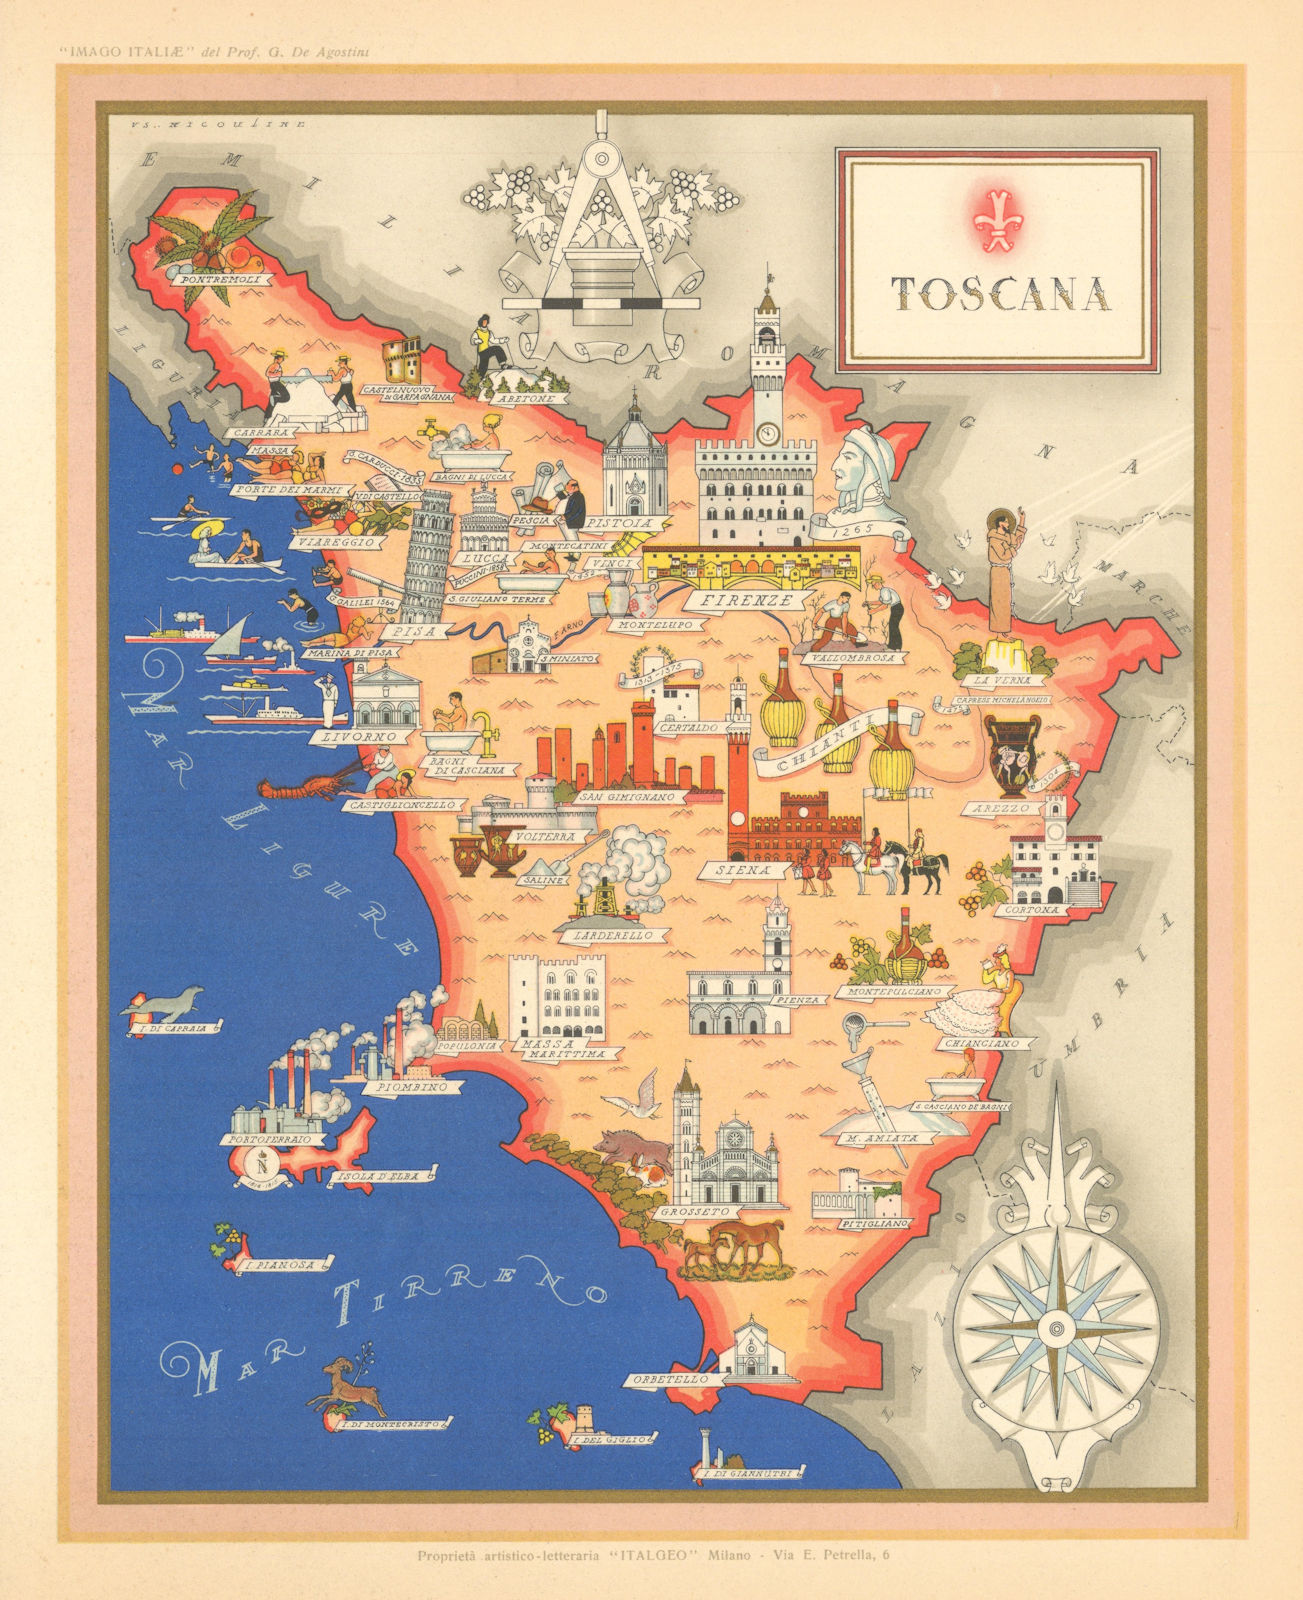 Toscana/Tuscany pictorial map by Vsevolode Nicouline. Italgeo/Agostini c1950